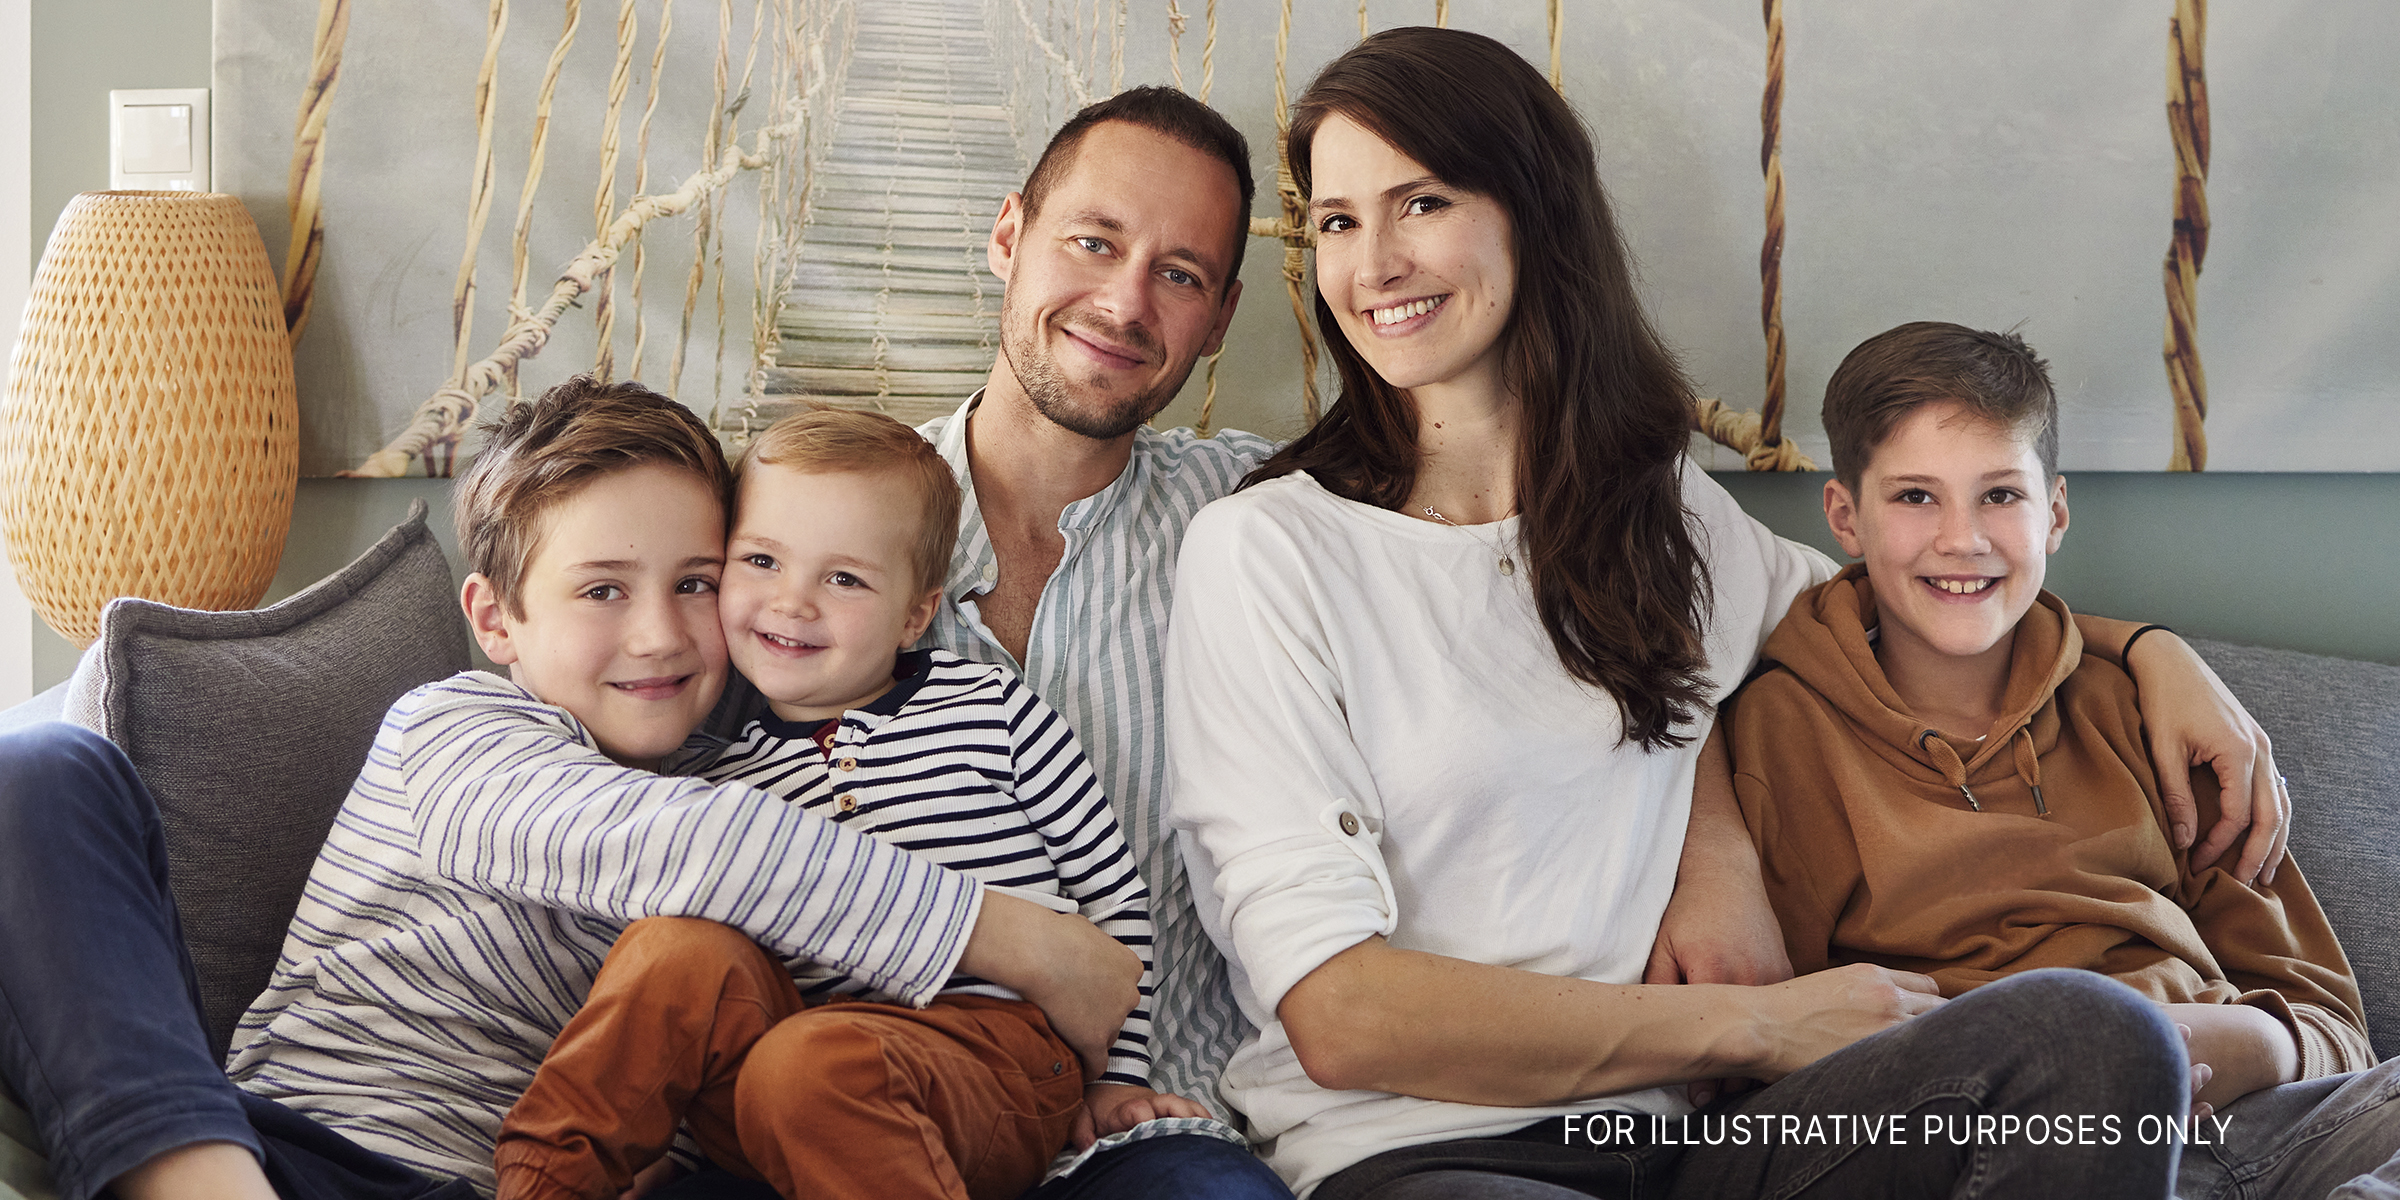 A family portrait | Source: Shutterstock